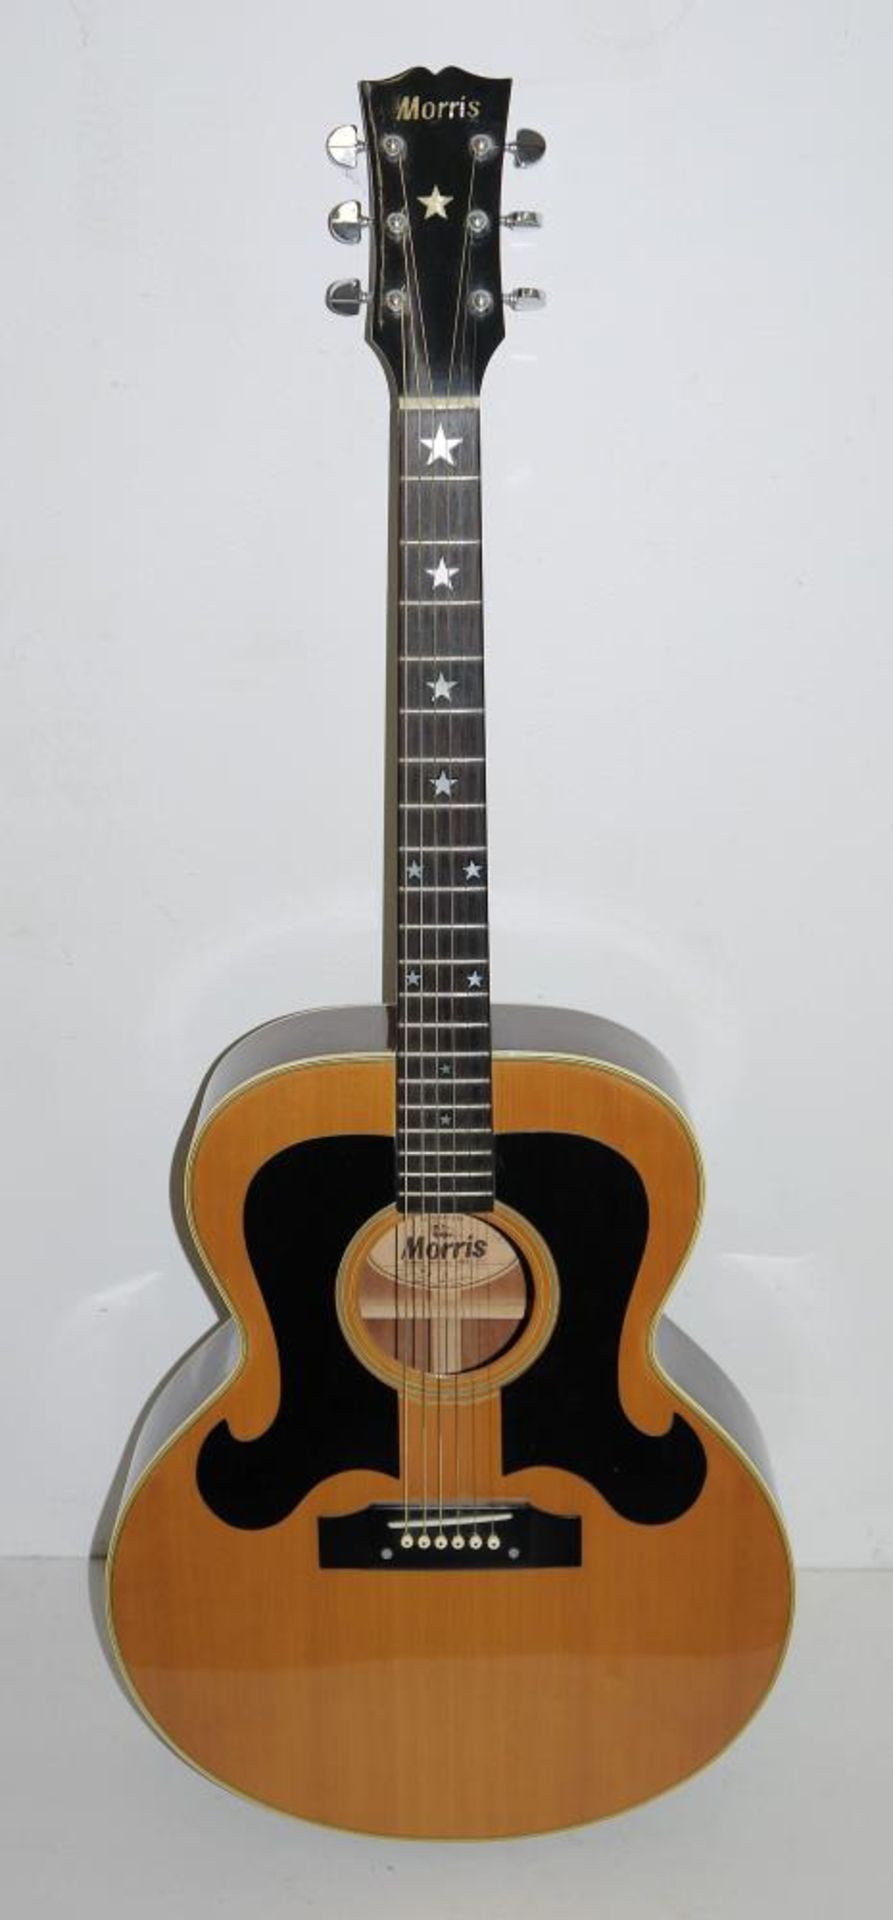 Hochwertige Akustik-Gitarre „Jumbo“ von Morris, Japan 1970er Jahre Sammlerstück Modell WJ-25, analog